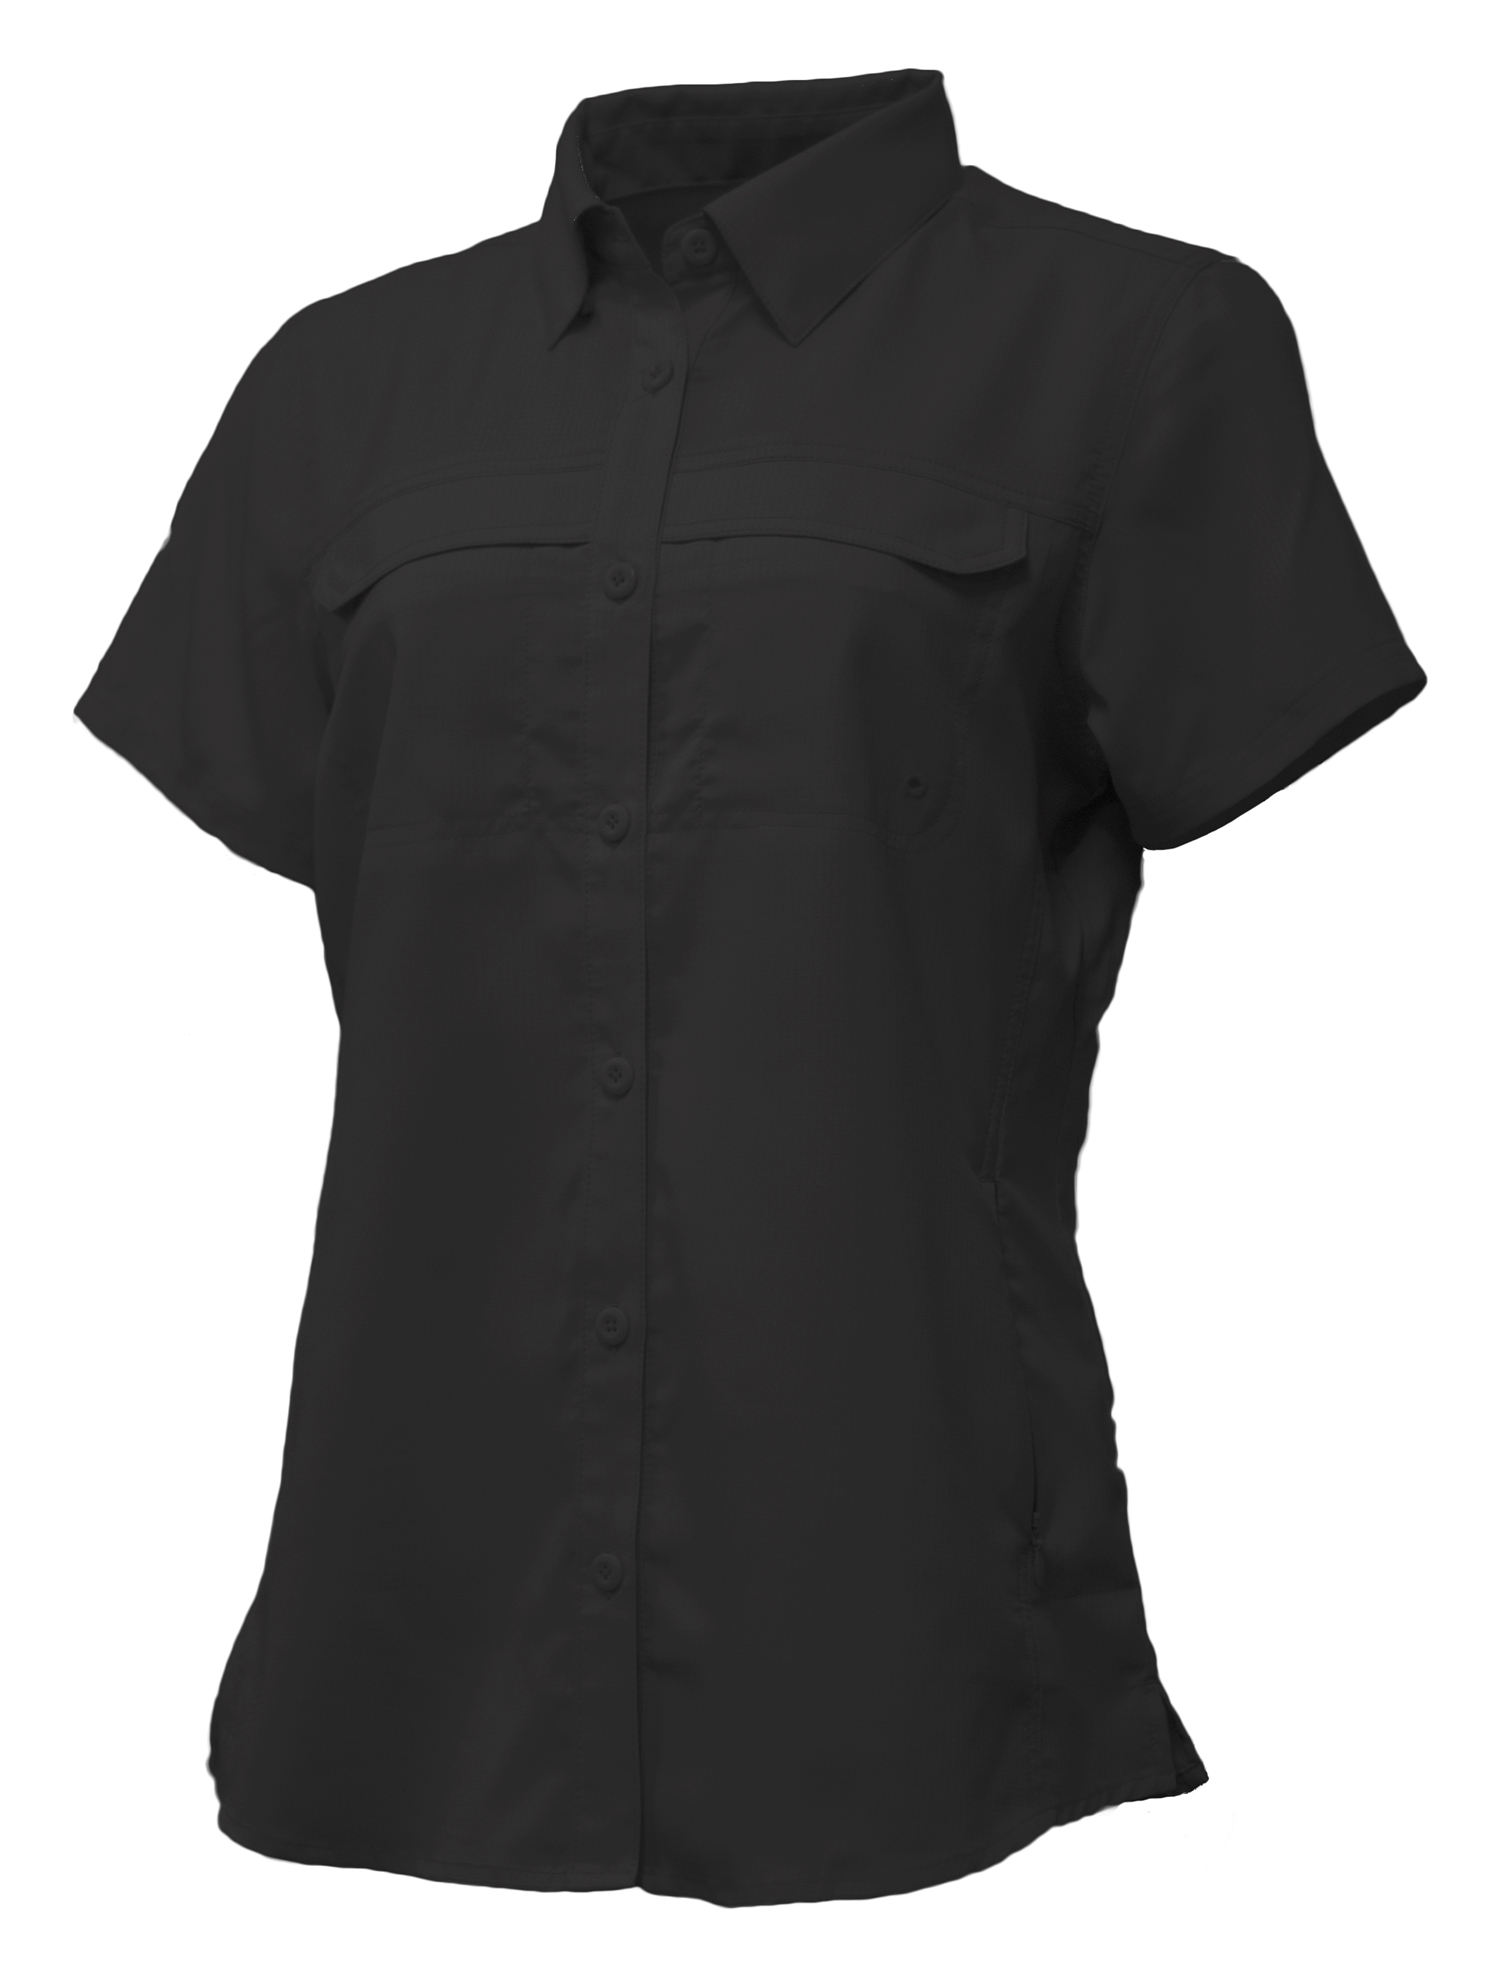 BAW Athletic Wear 3101 - Ladies Short Sleeve Fishing Shirt